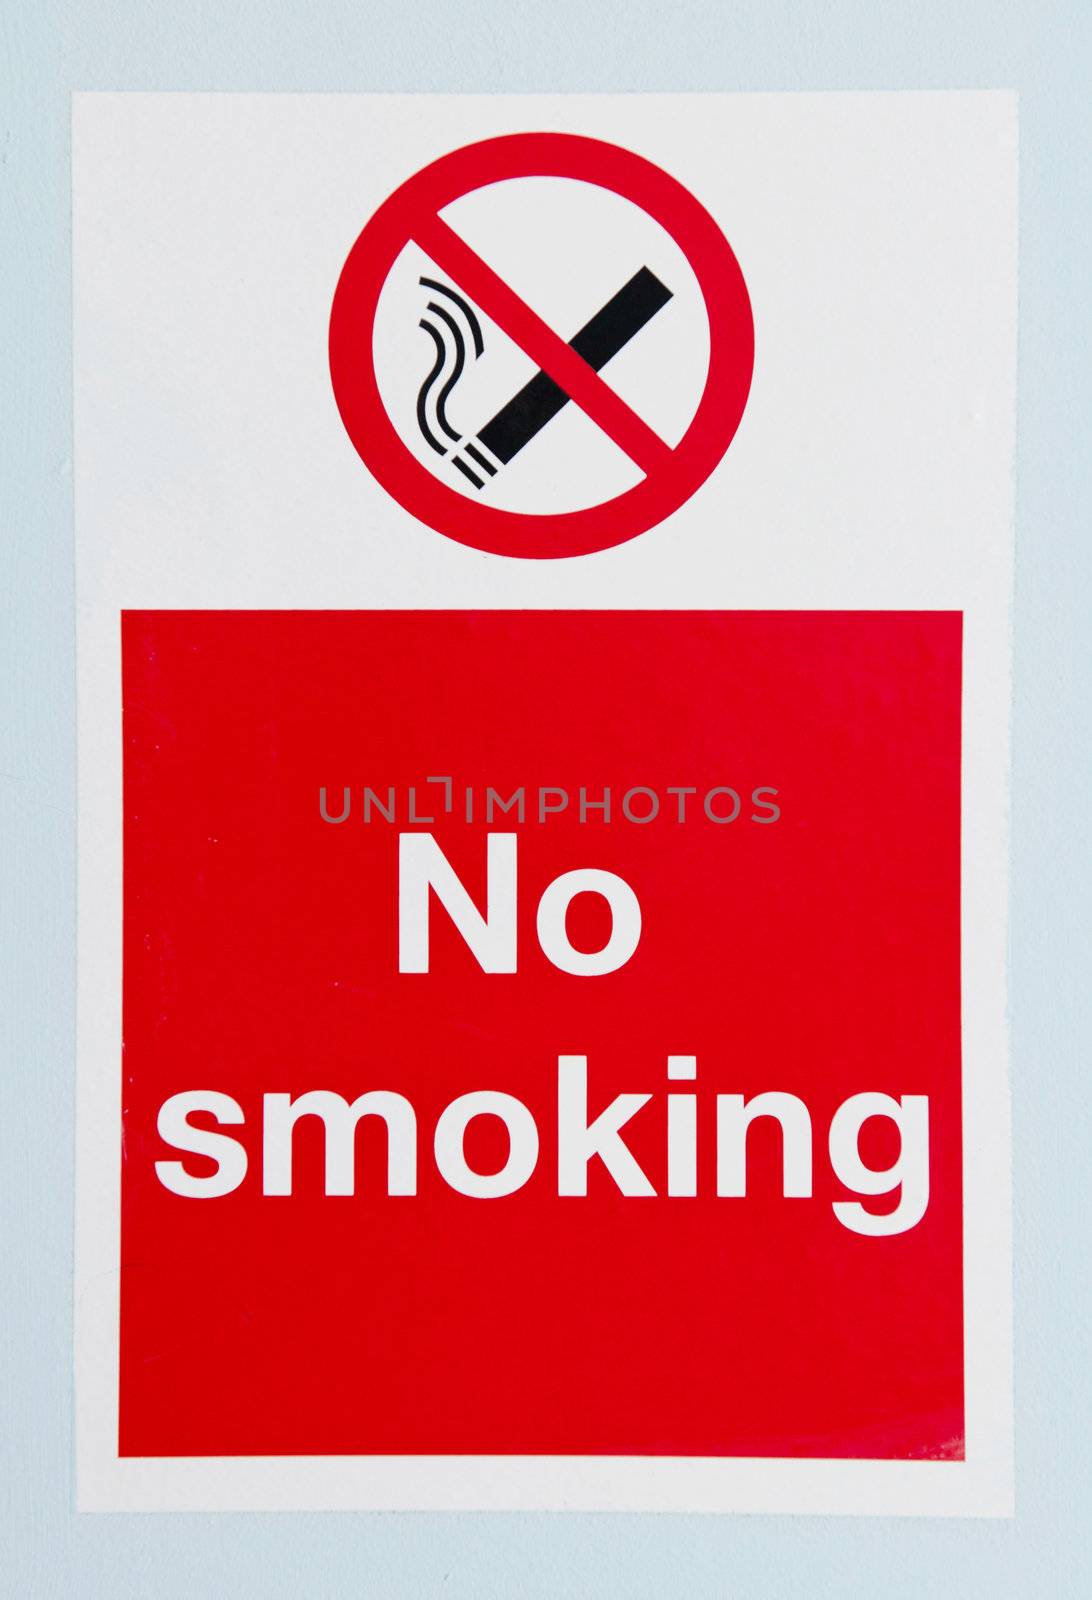 No smoking sign by luissantos84